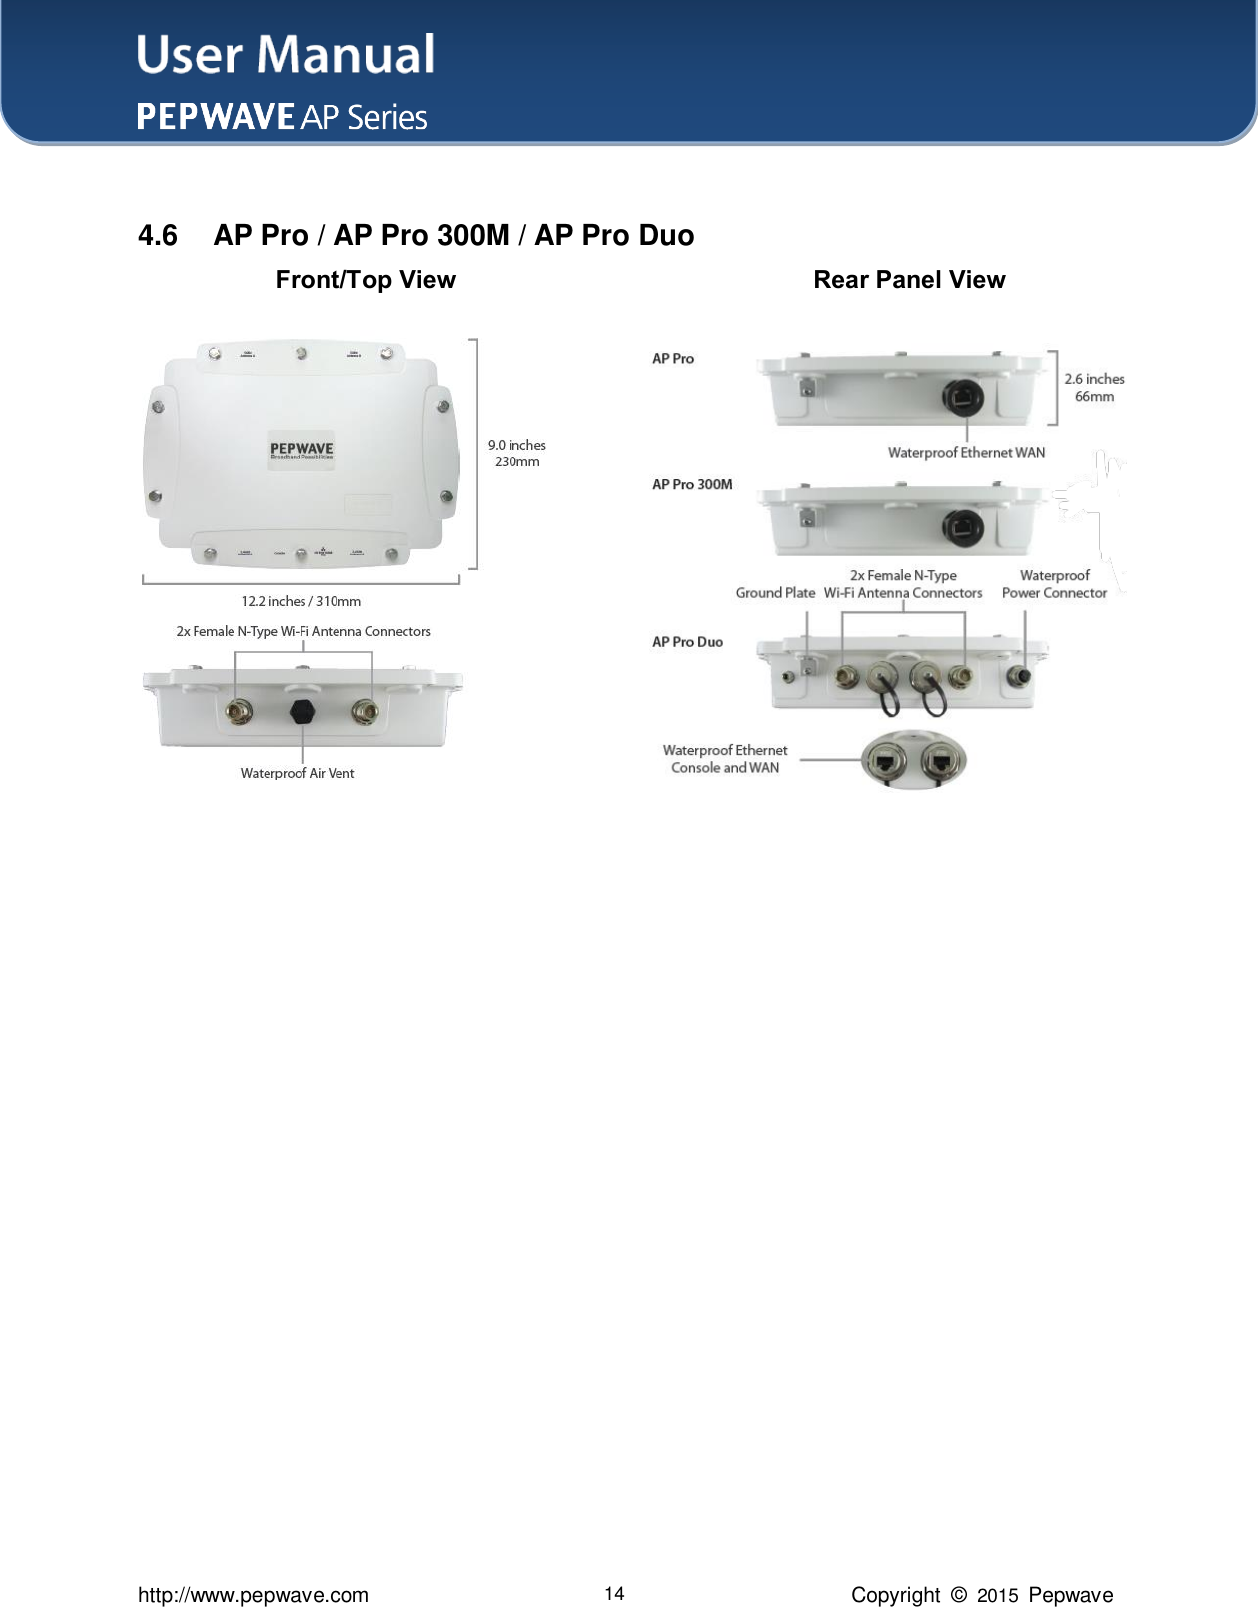 User Manual    http://www.pepwave.com 14 Copyright  ©  2015  Pepwave  4.6  AP Pro / AP Pro 300M / AP Pro Duo            Front/Top View            Rear Panel View                                                                      